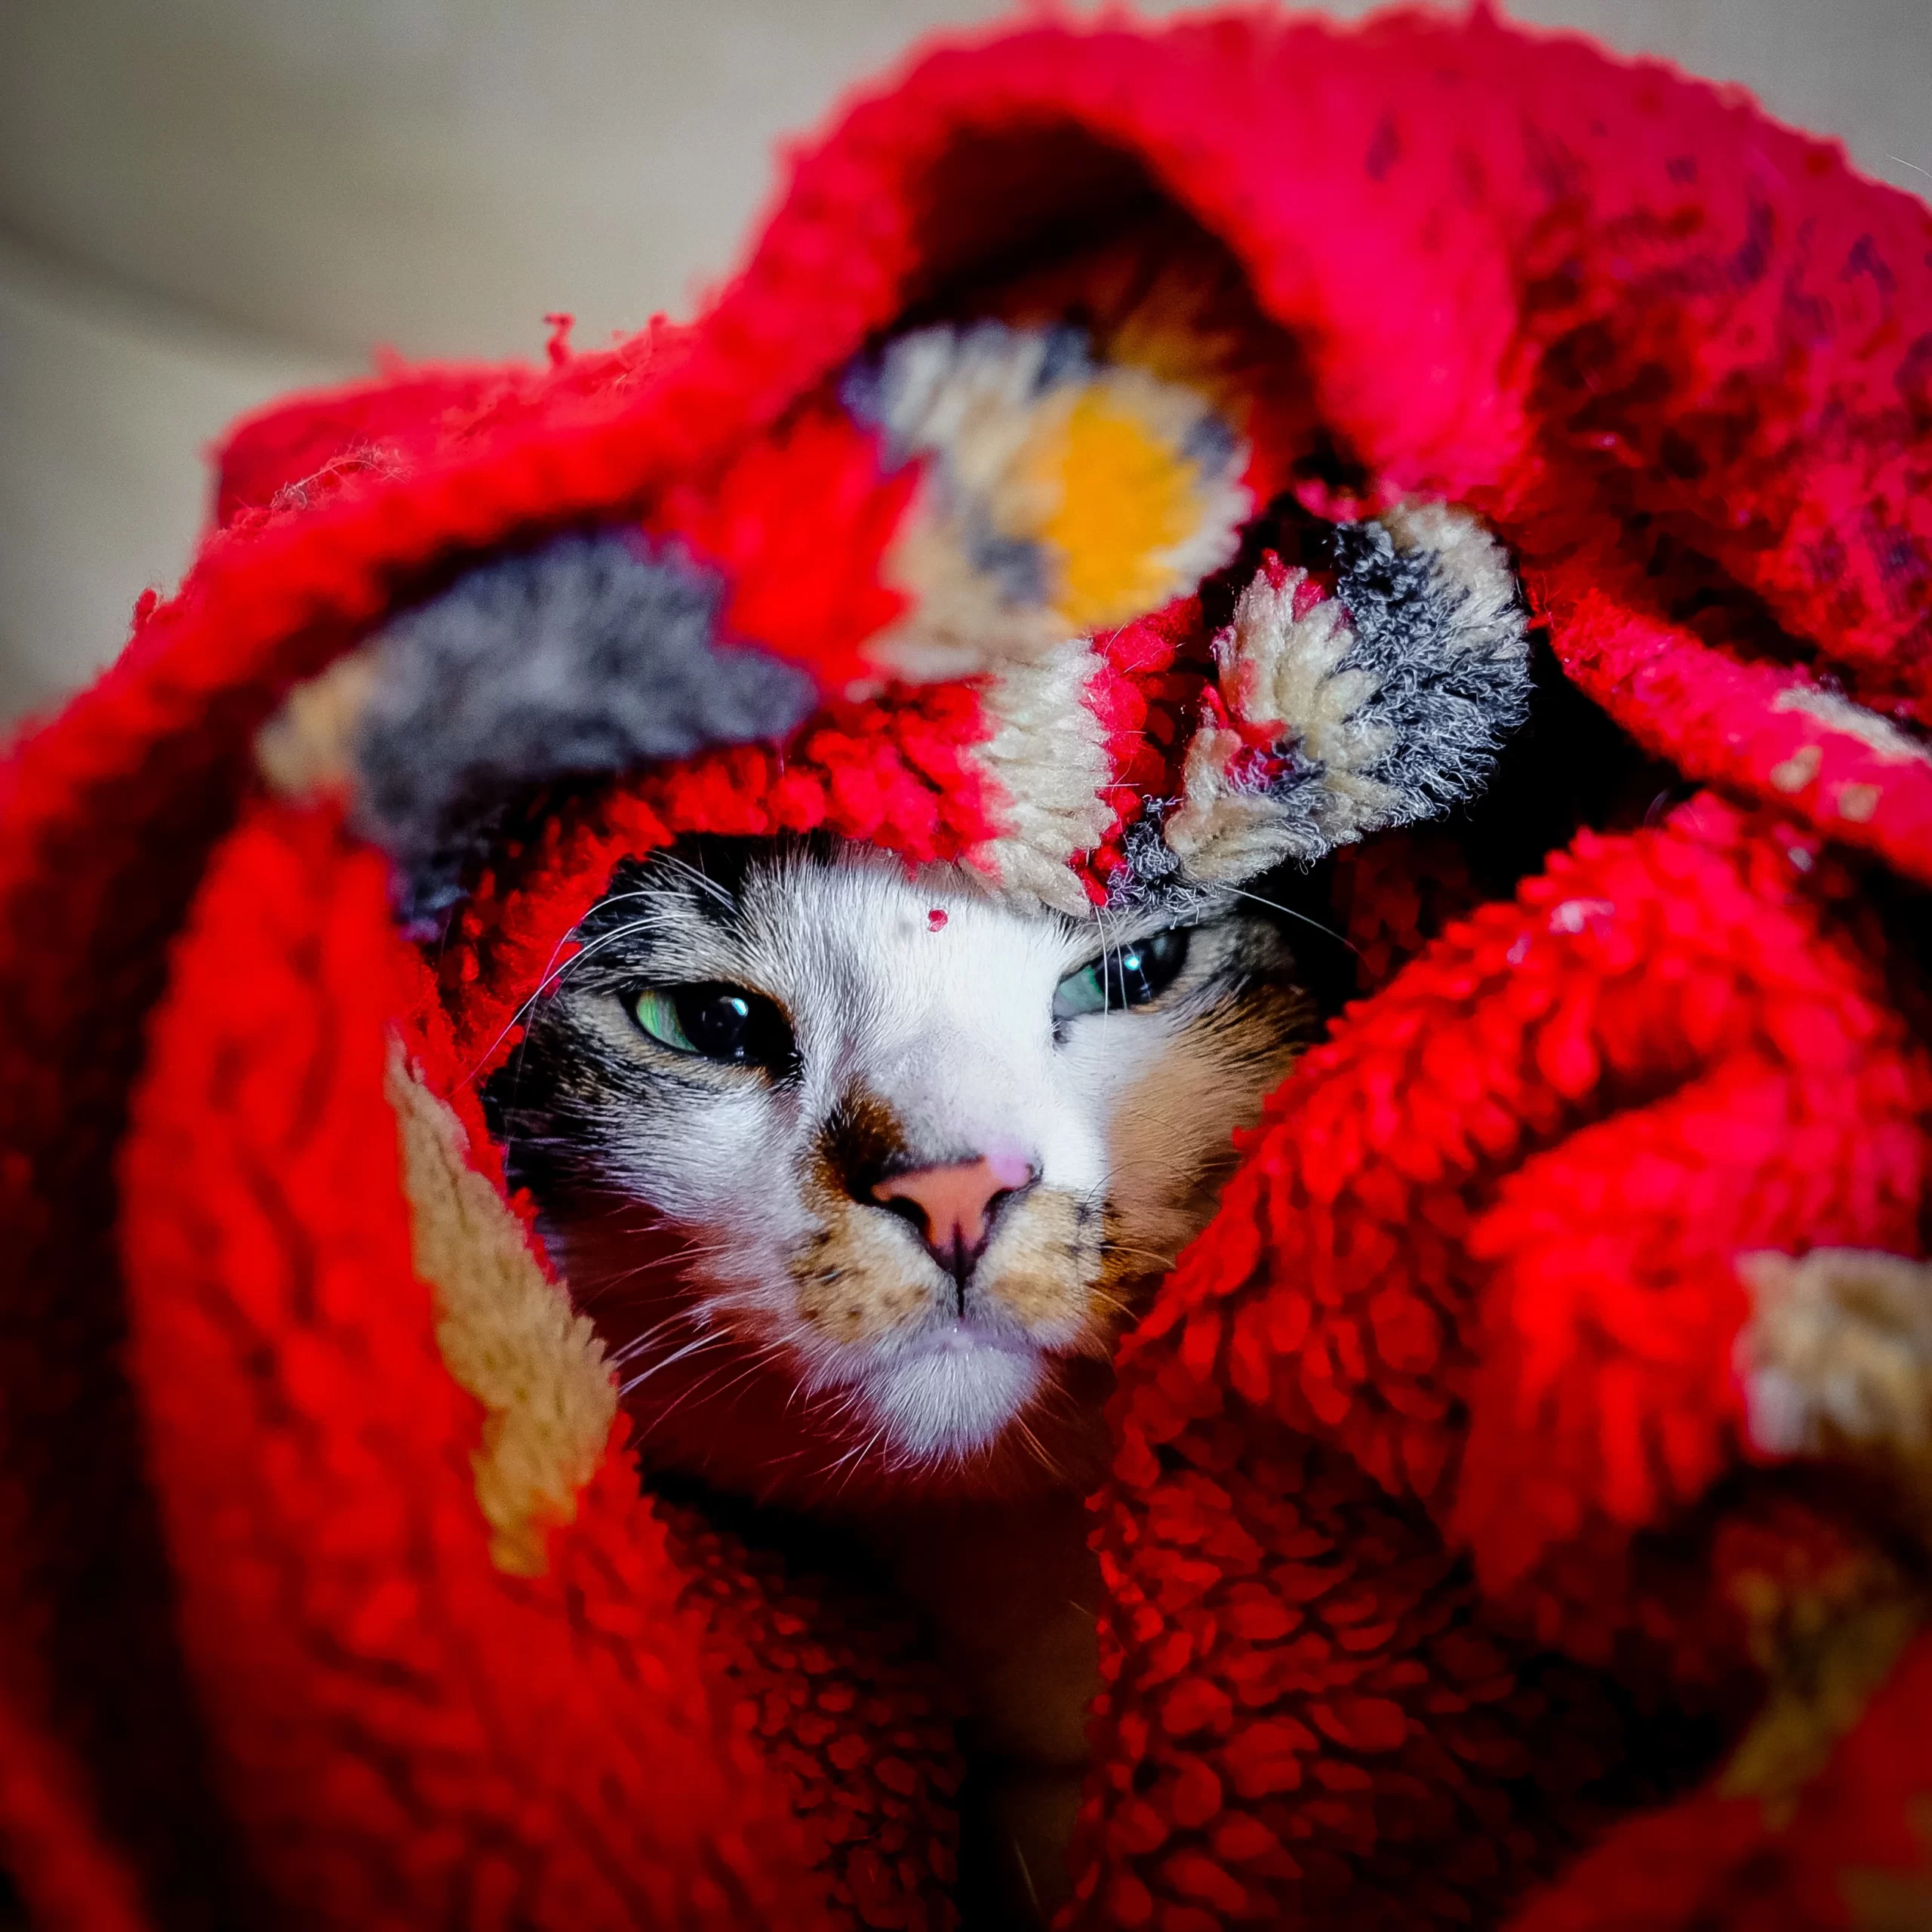 francesco-ungaro-cat looking out from bundled in blanket cover -unsplash